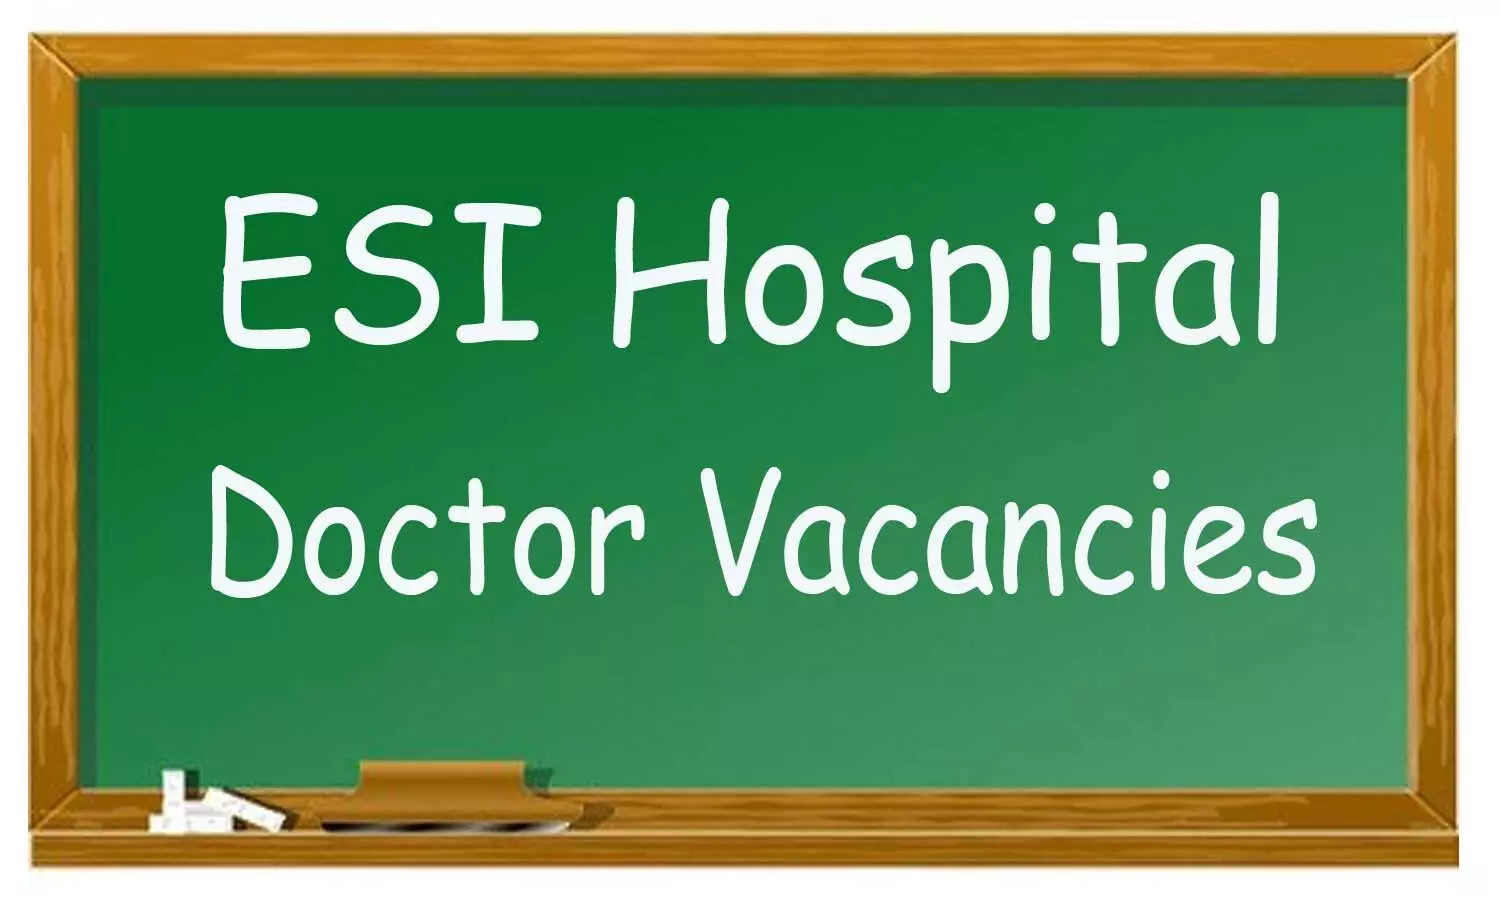 Walk-In-Interview At ESI Hospital Delhi For SR, Specialists Posts: Details